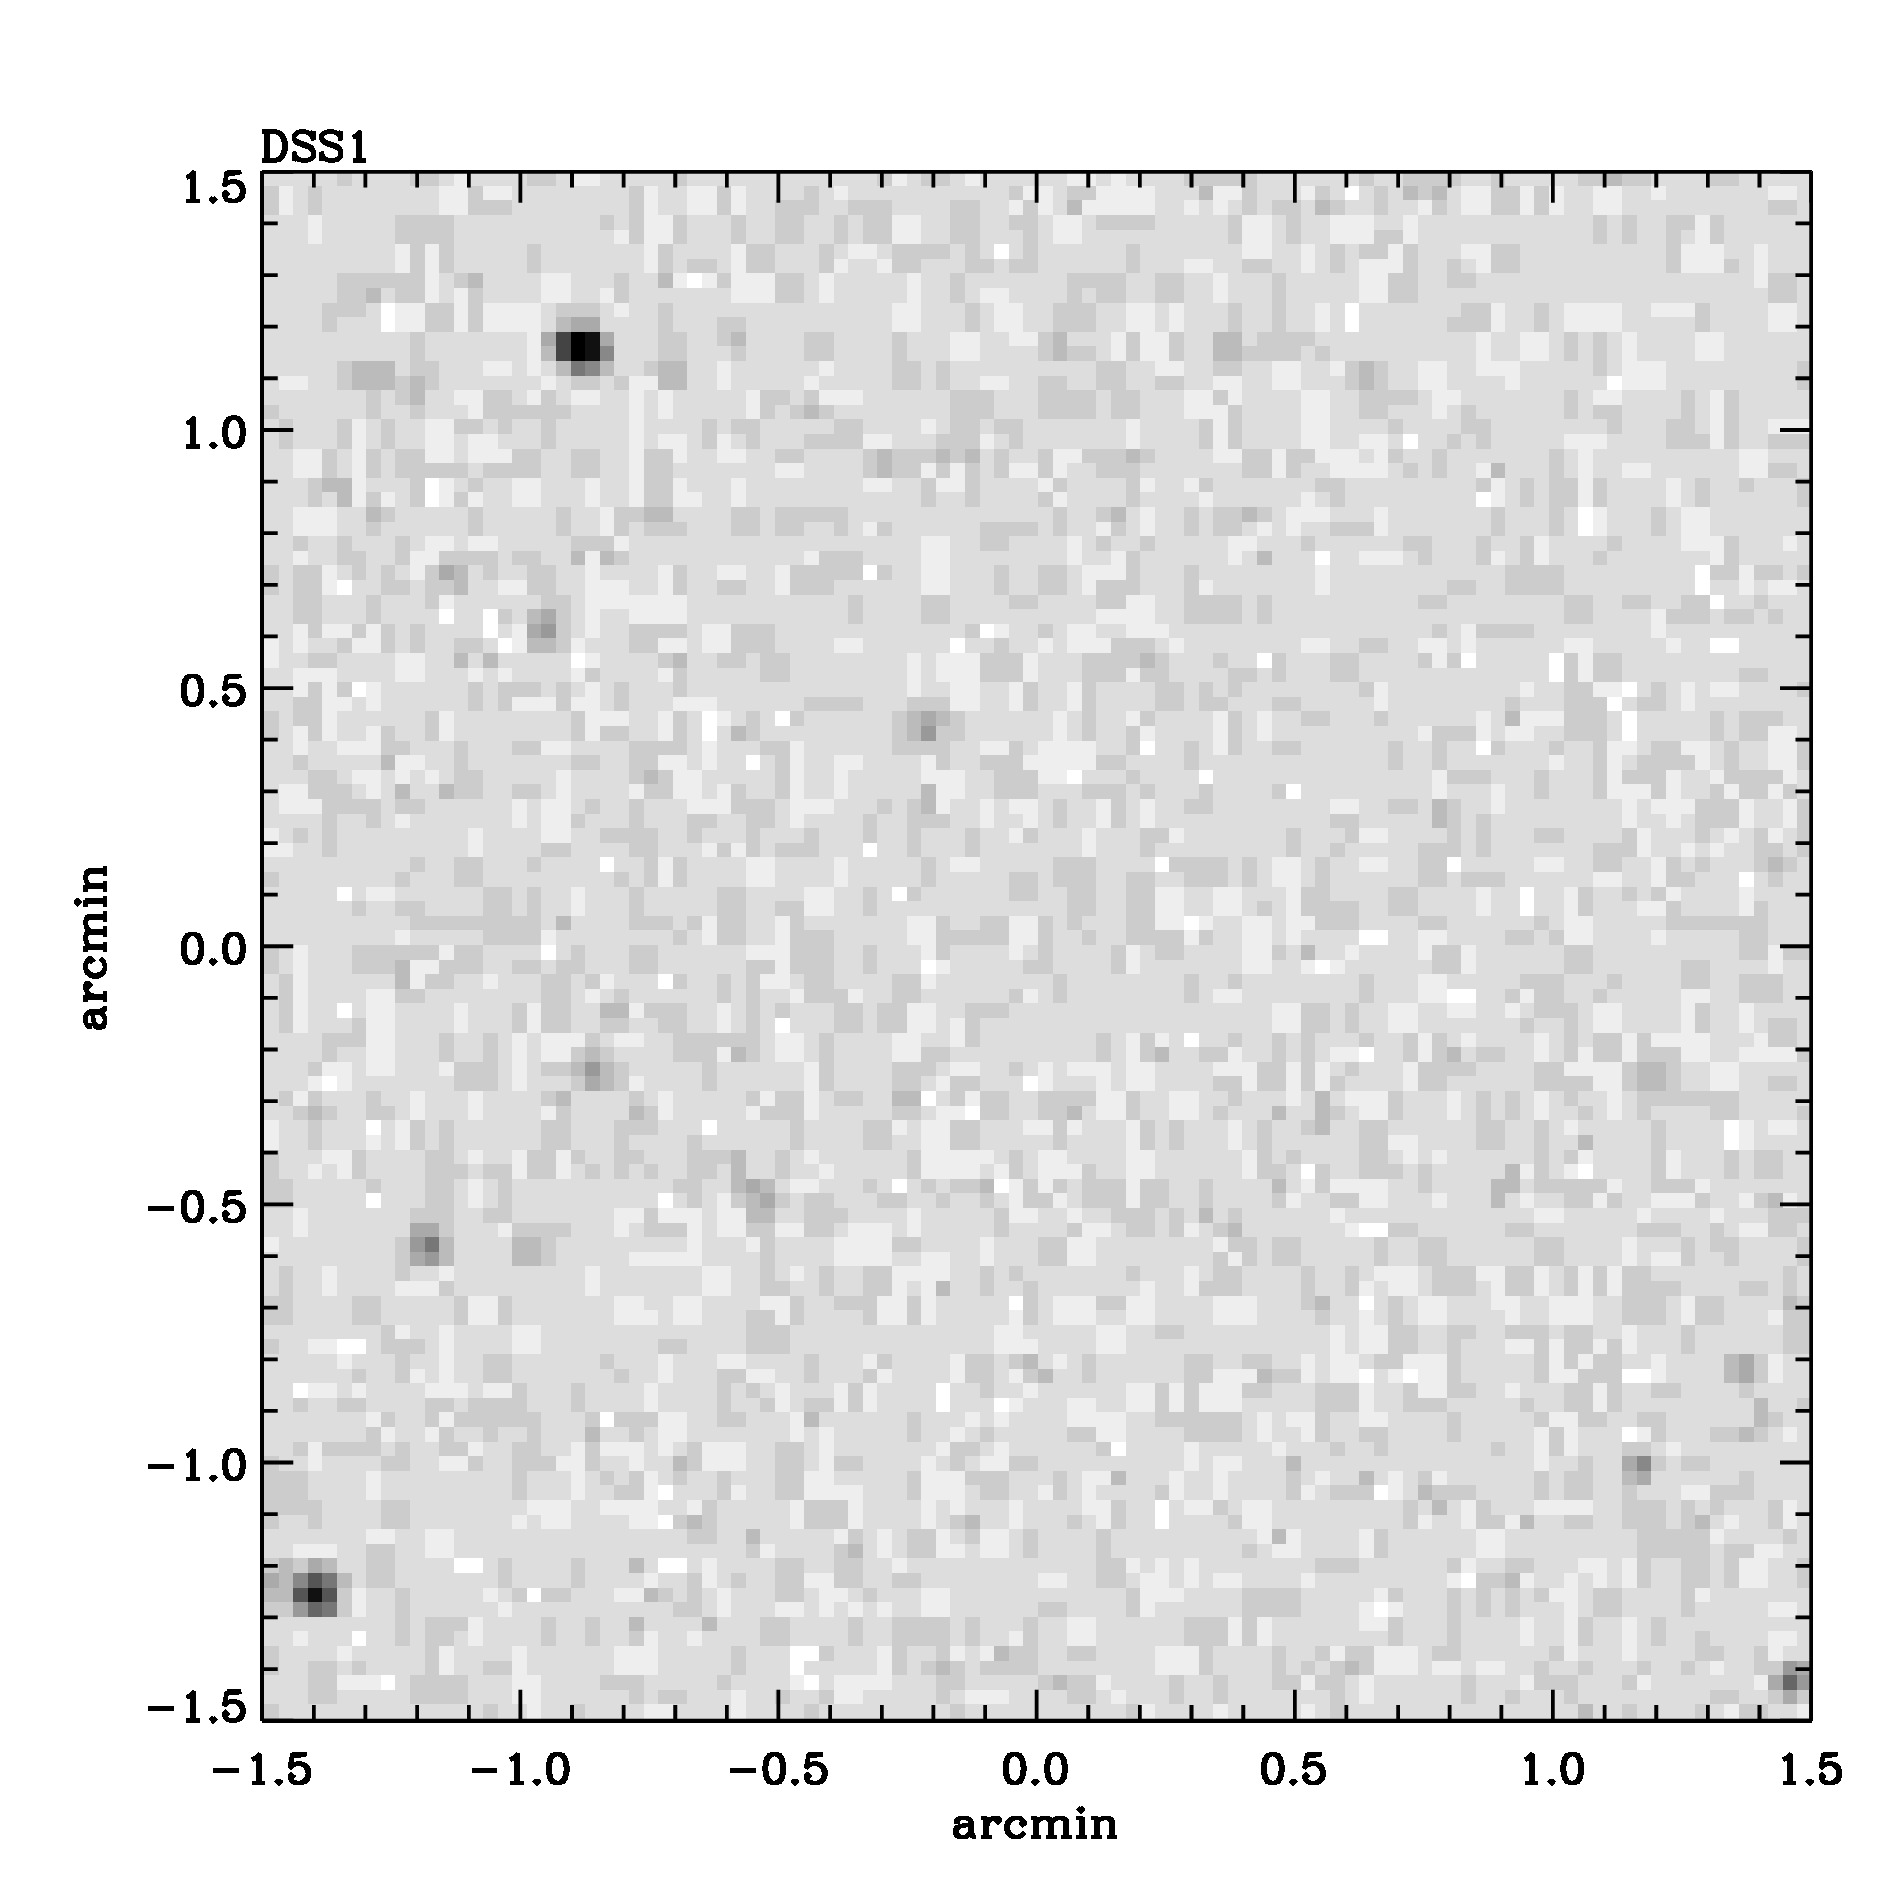 Optical image for SWIFT J1833.7-1032